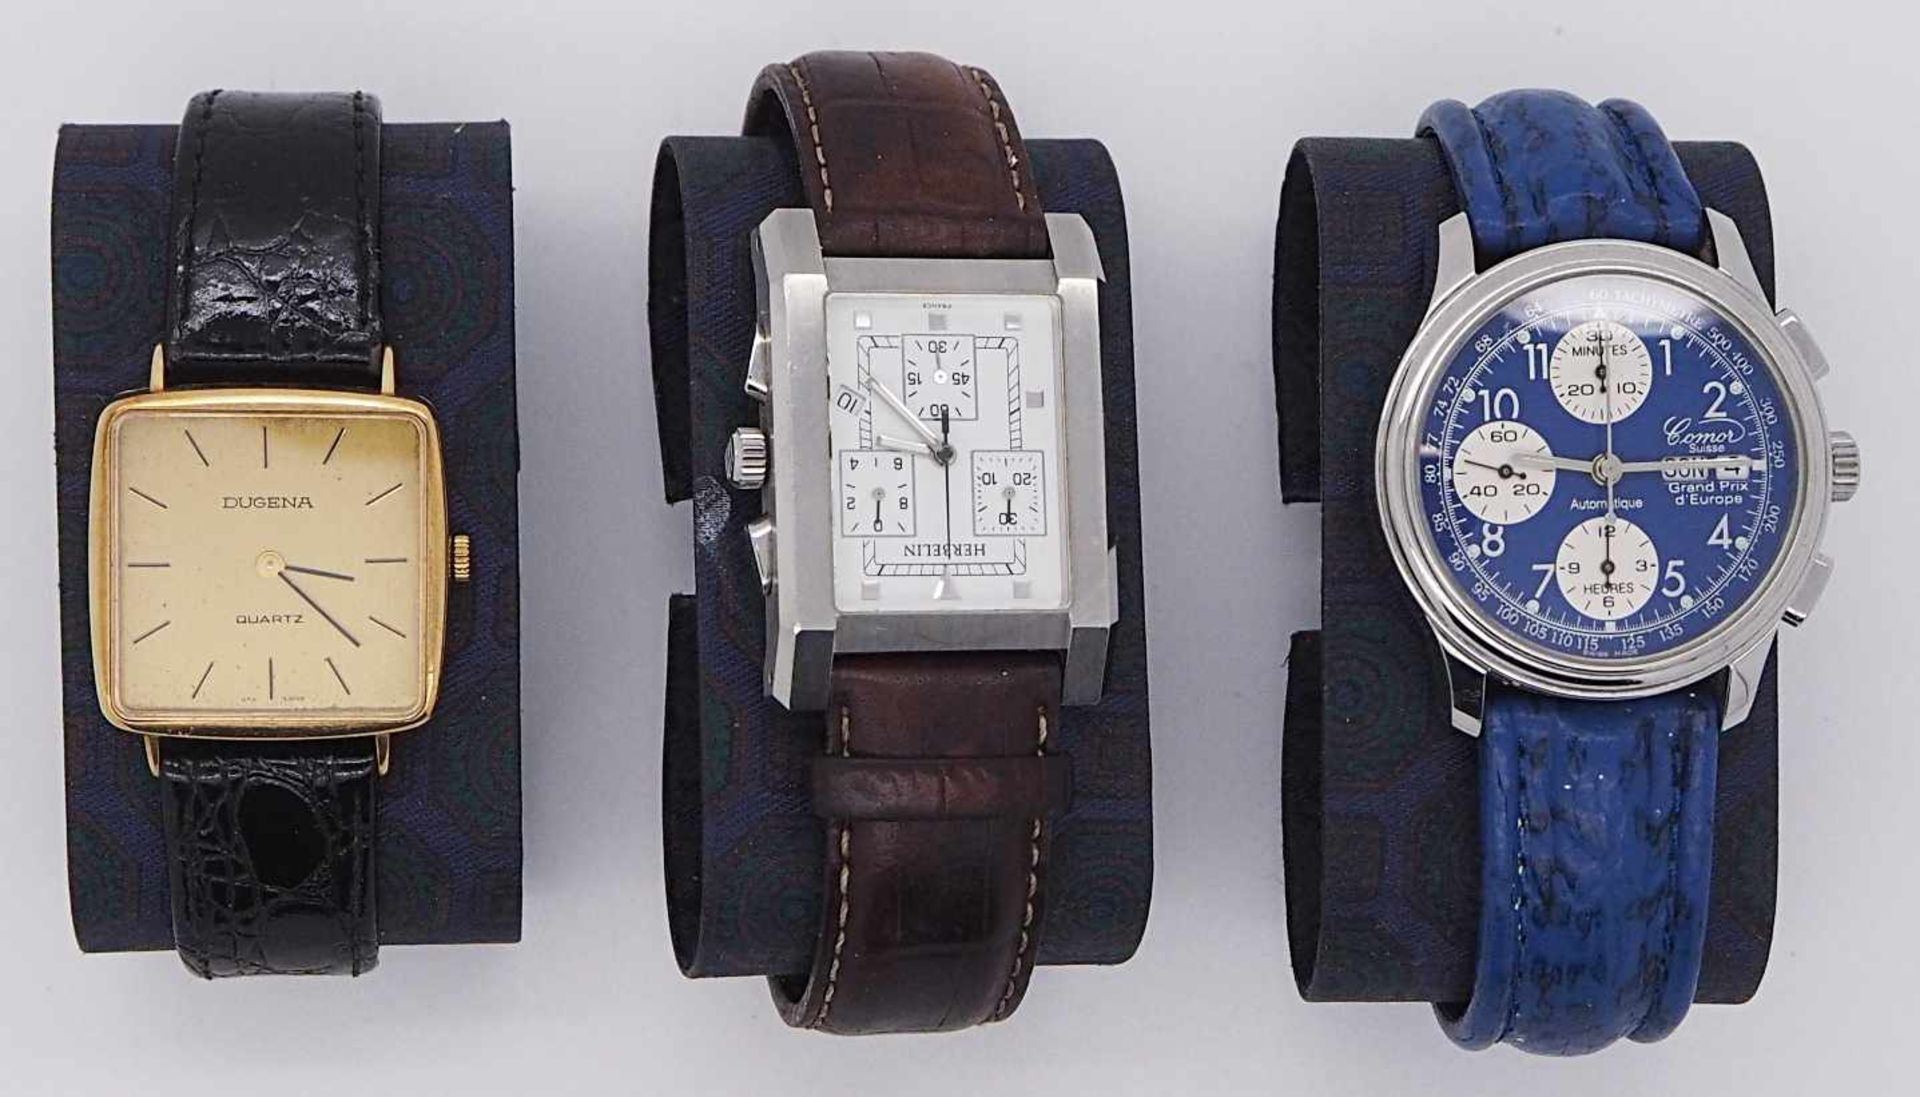 3 Armbanduhren DUGENA, Michel HERBELIN (NP 697,50 Euro i. Jahr 2003)u.a. z.T. Automatik/Quarz